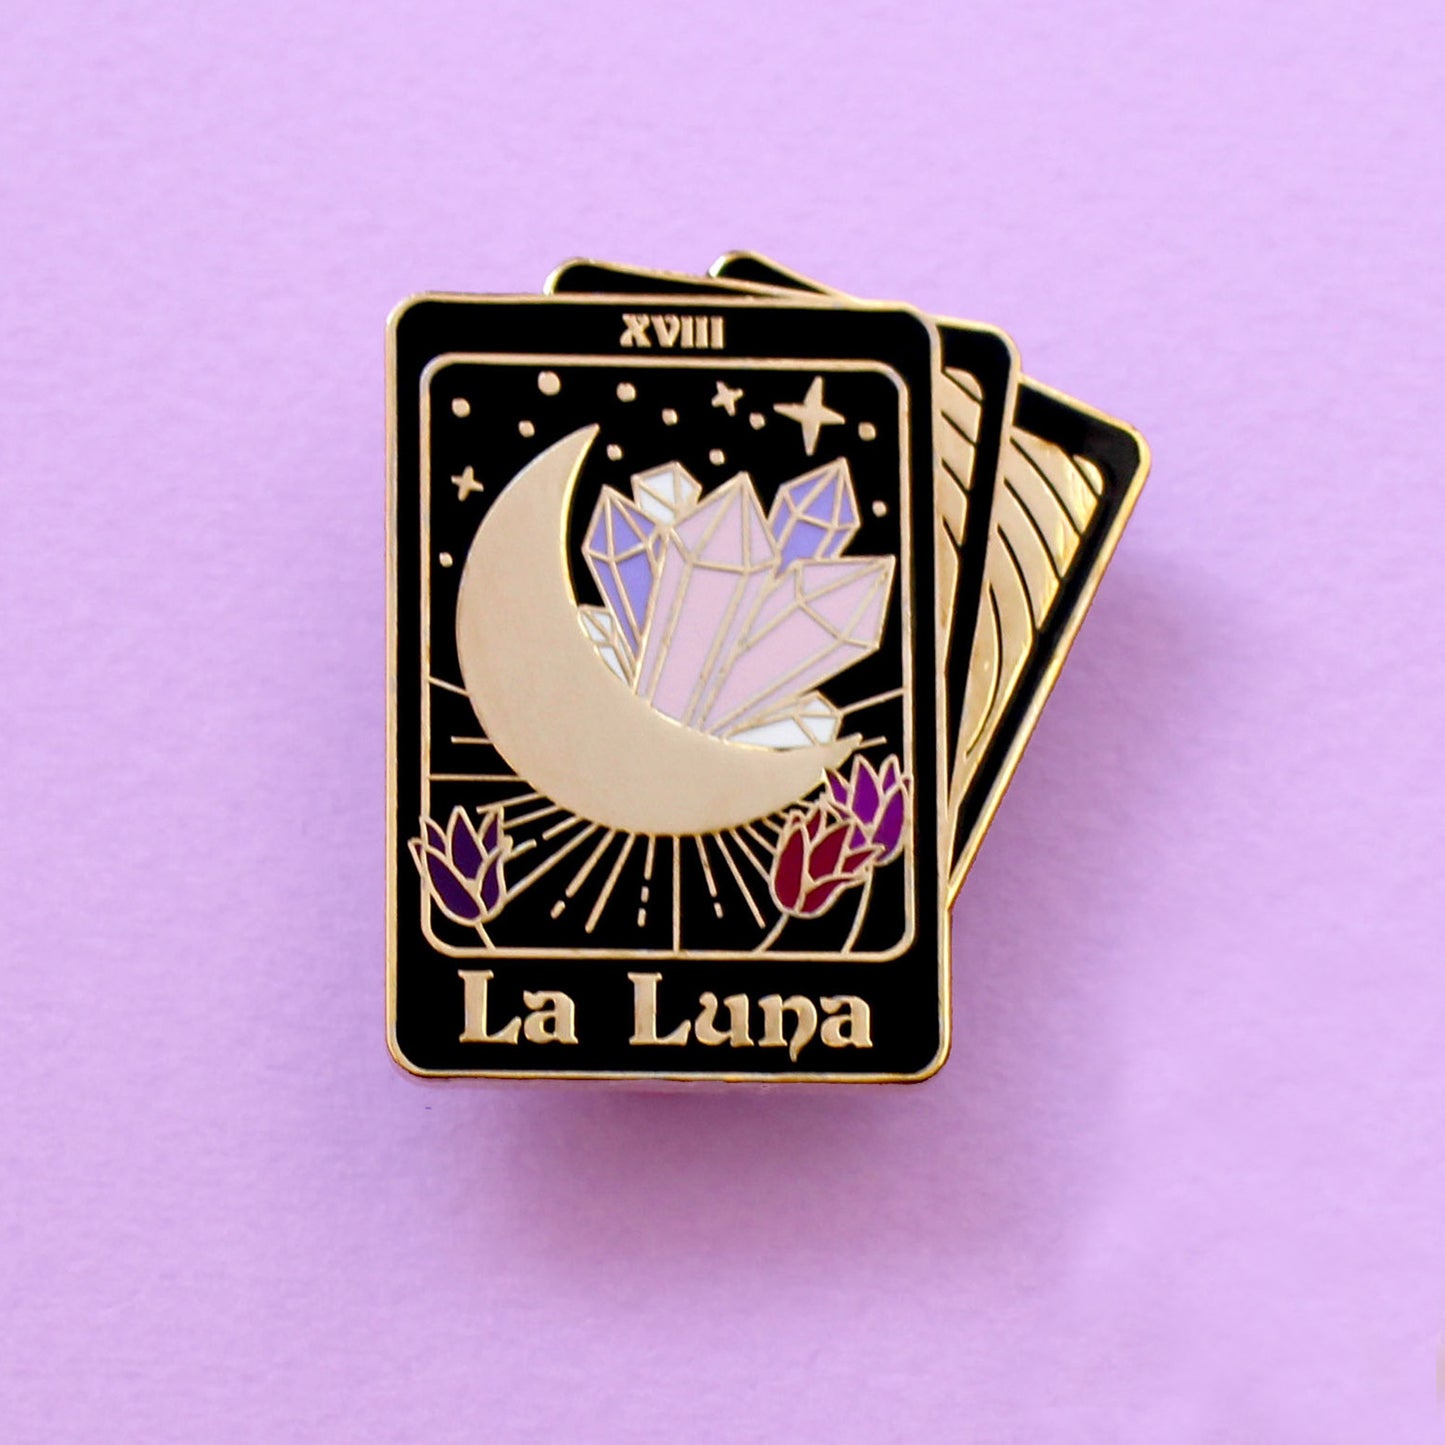 La Luna tarot card enamel pin